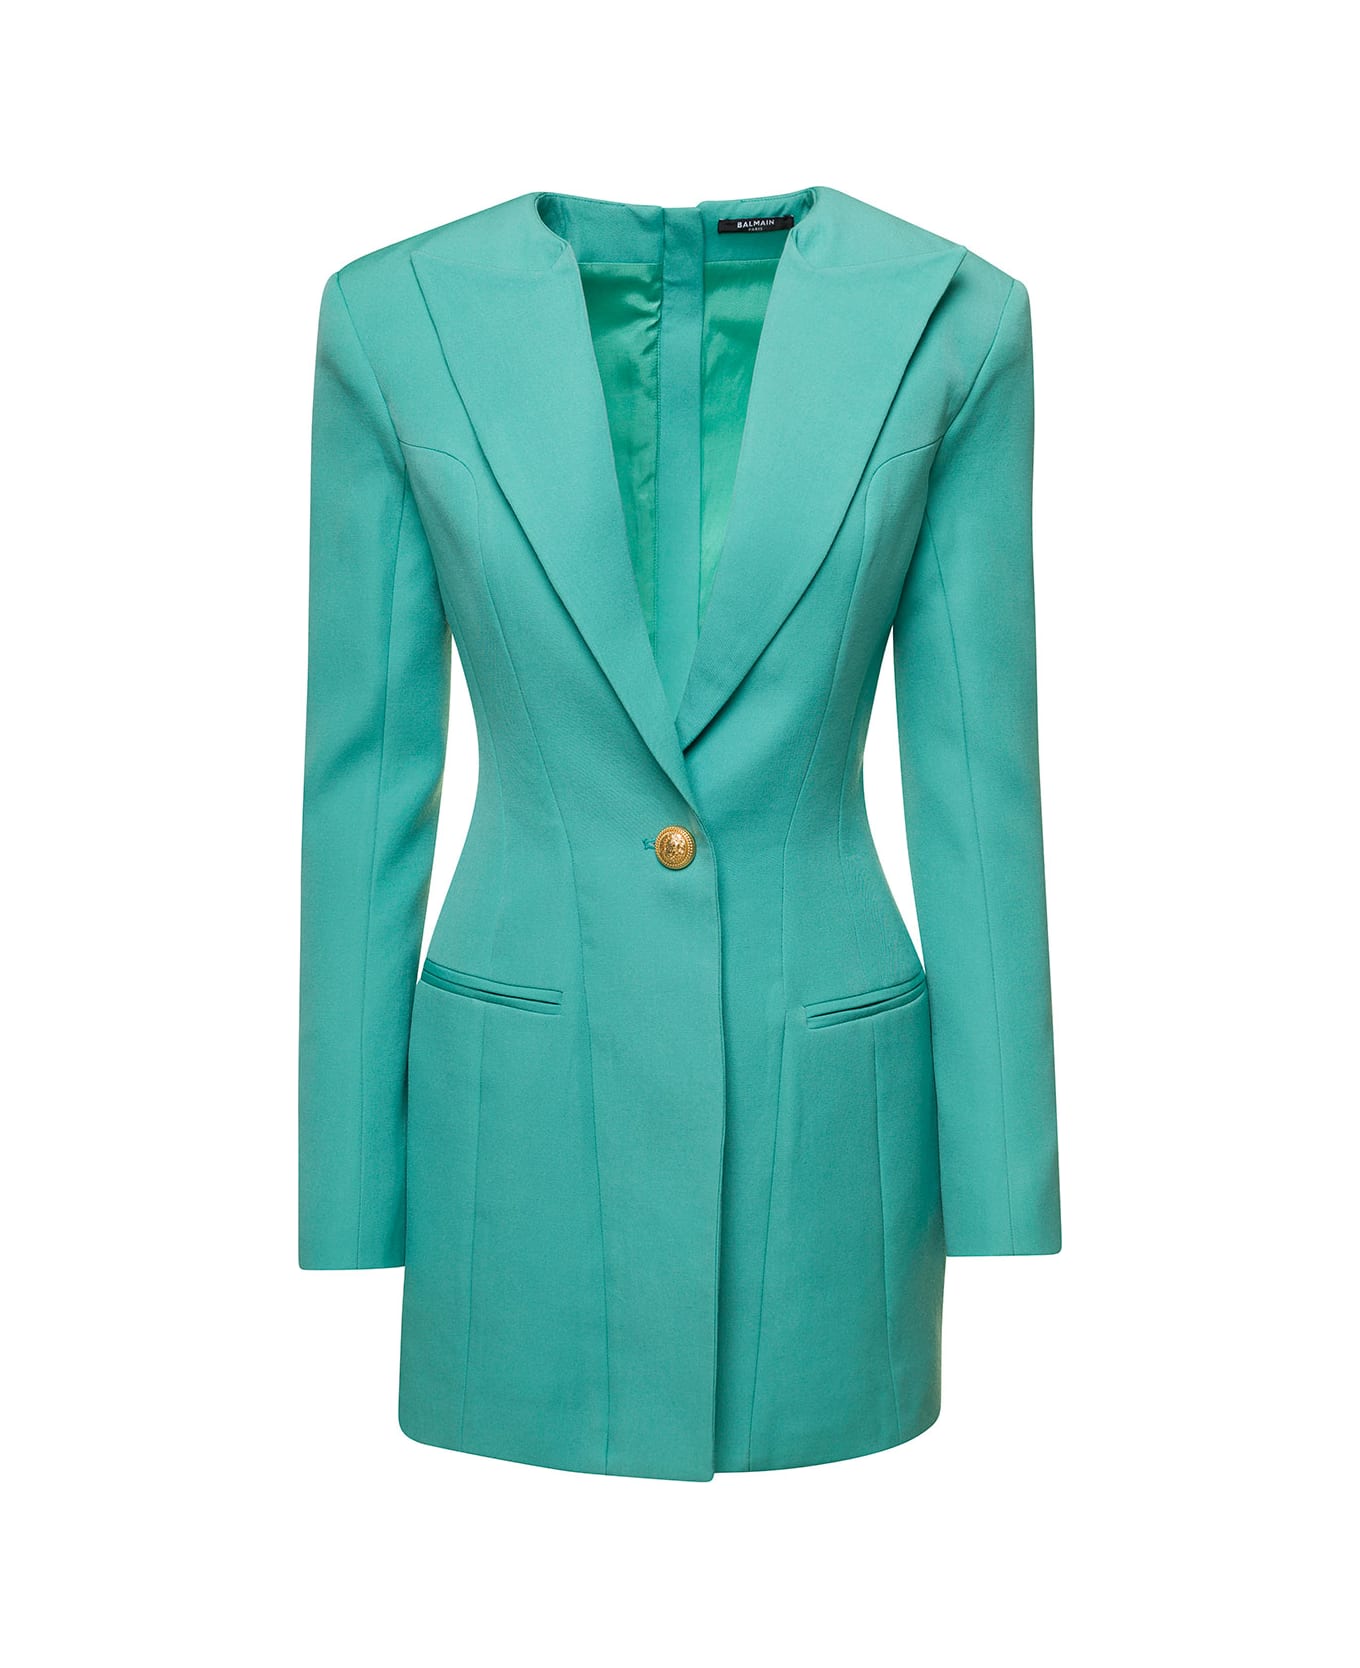 Balmain Light Blue Tailored Blazer Dress With Padded Shoulders In Wool Woman - Green コート